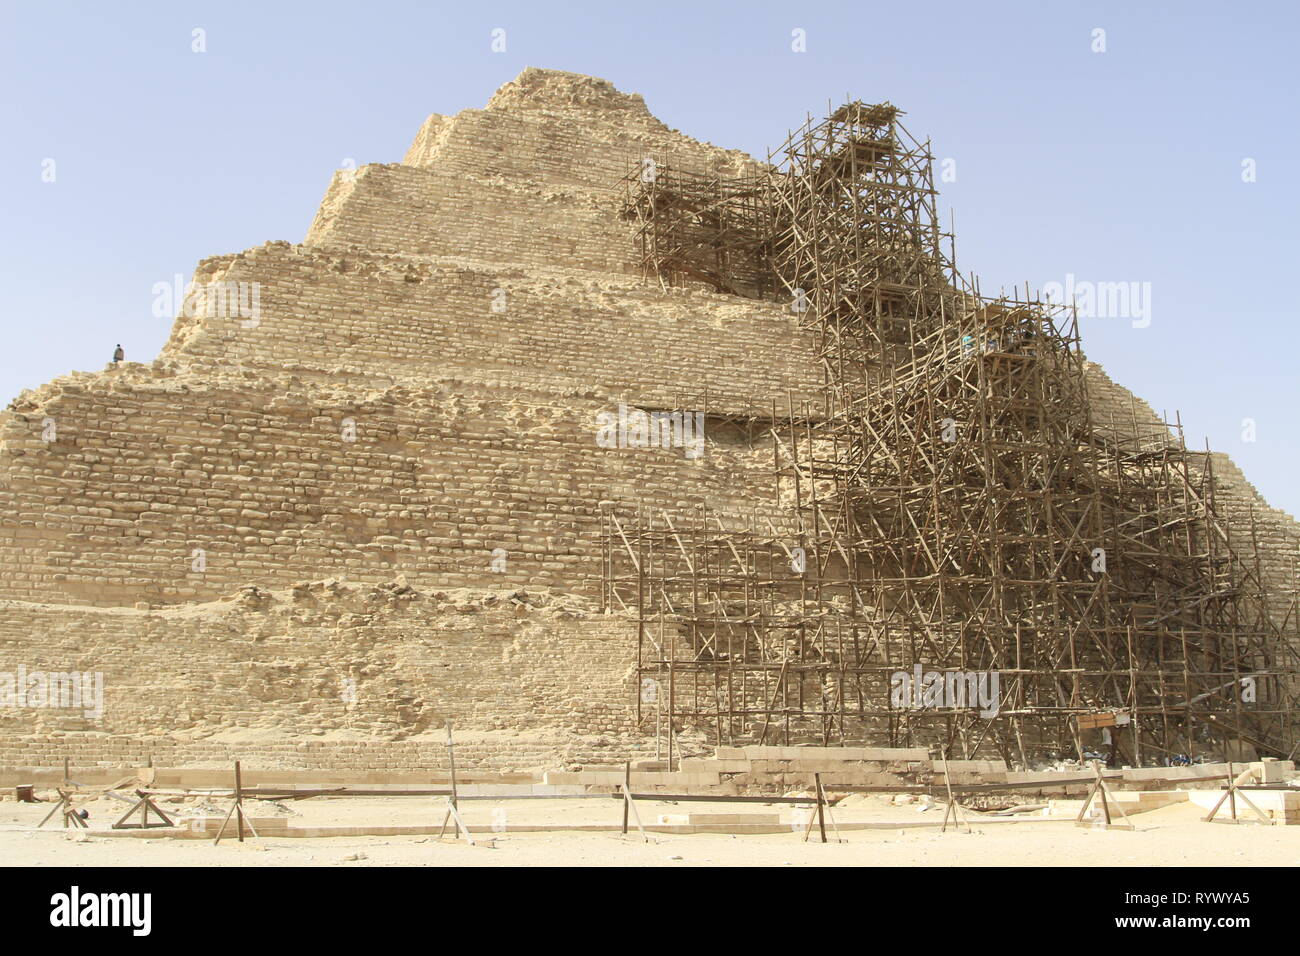 La pyramide de Djoser en cours de restauration, Saqqara, le gouvernorat de Giza, Egypte Banque D'Images